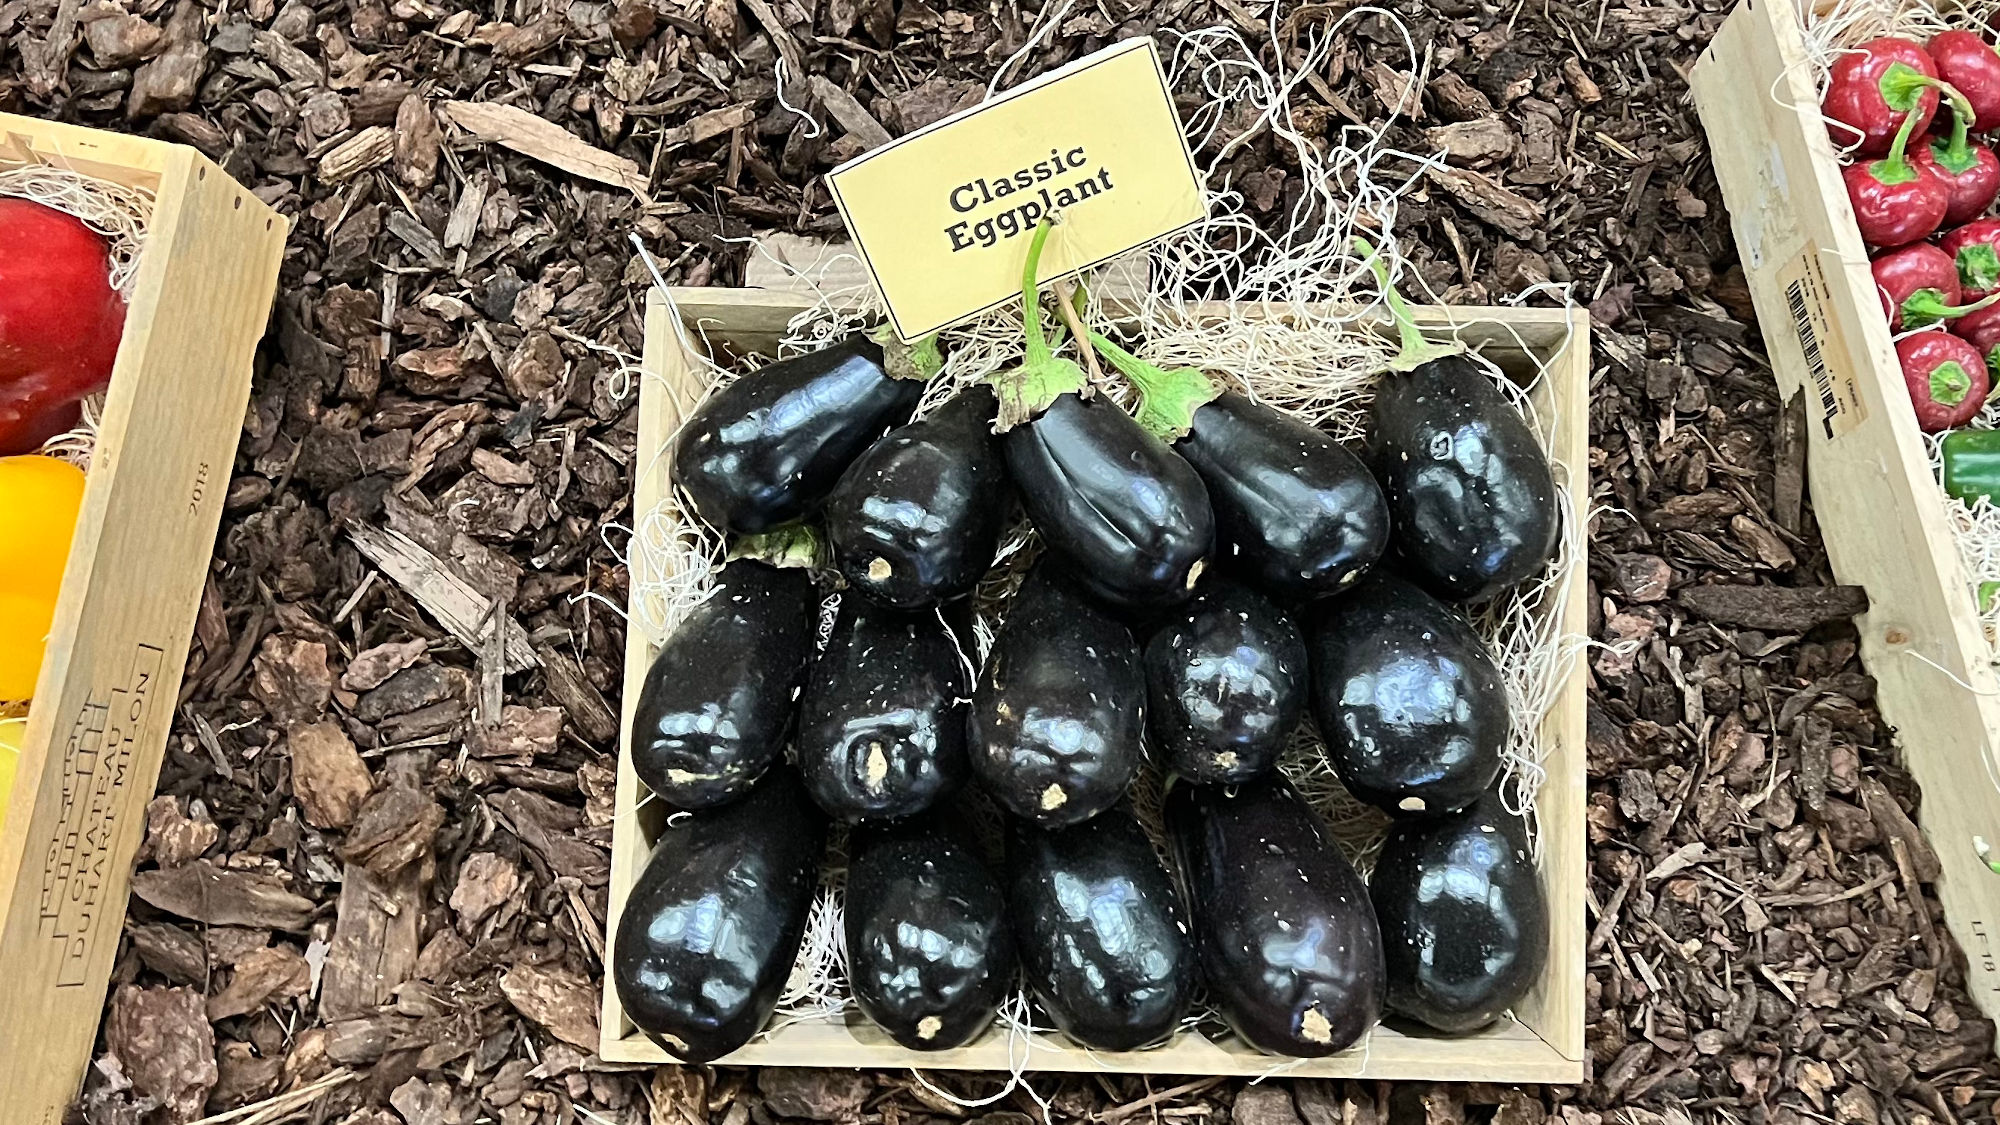 Underwood Family Farms Classic Eggplant